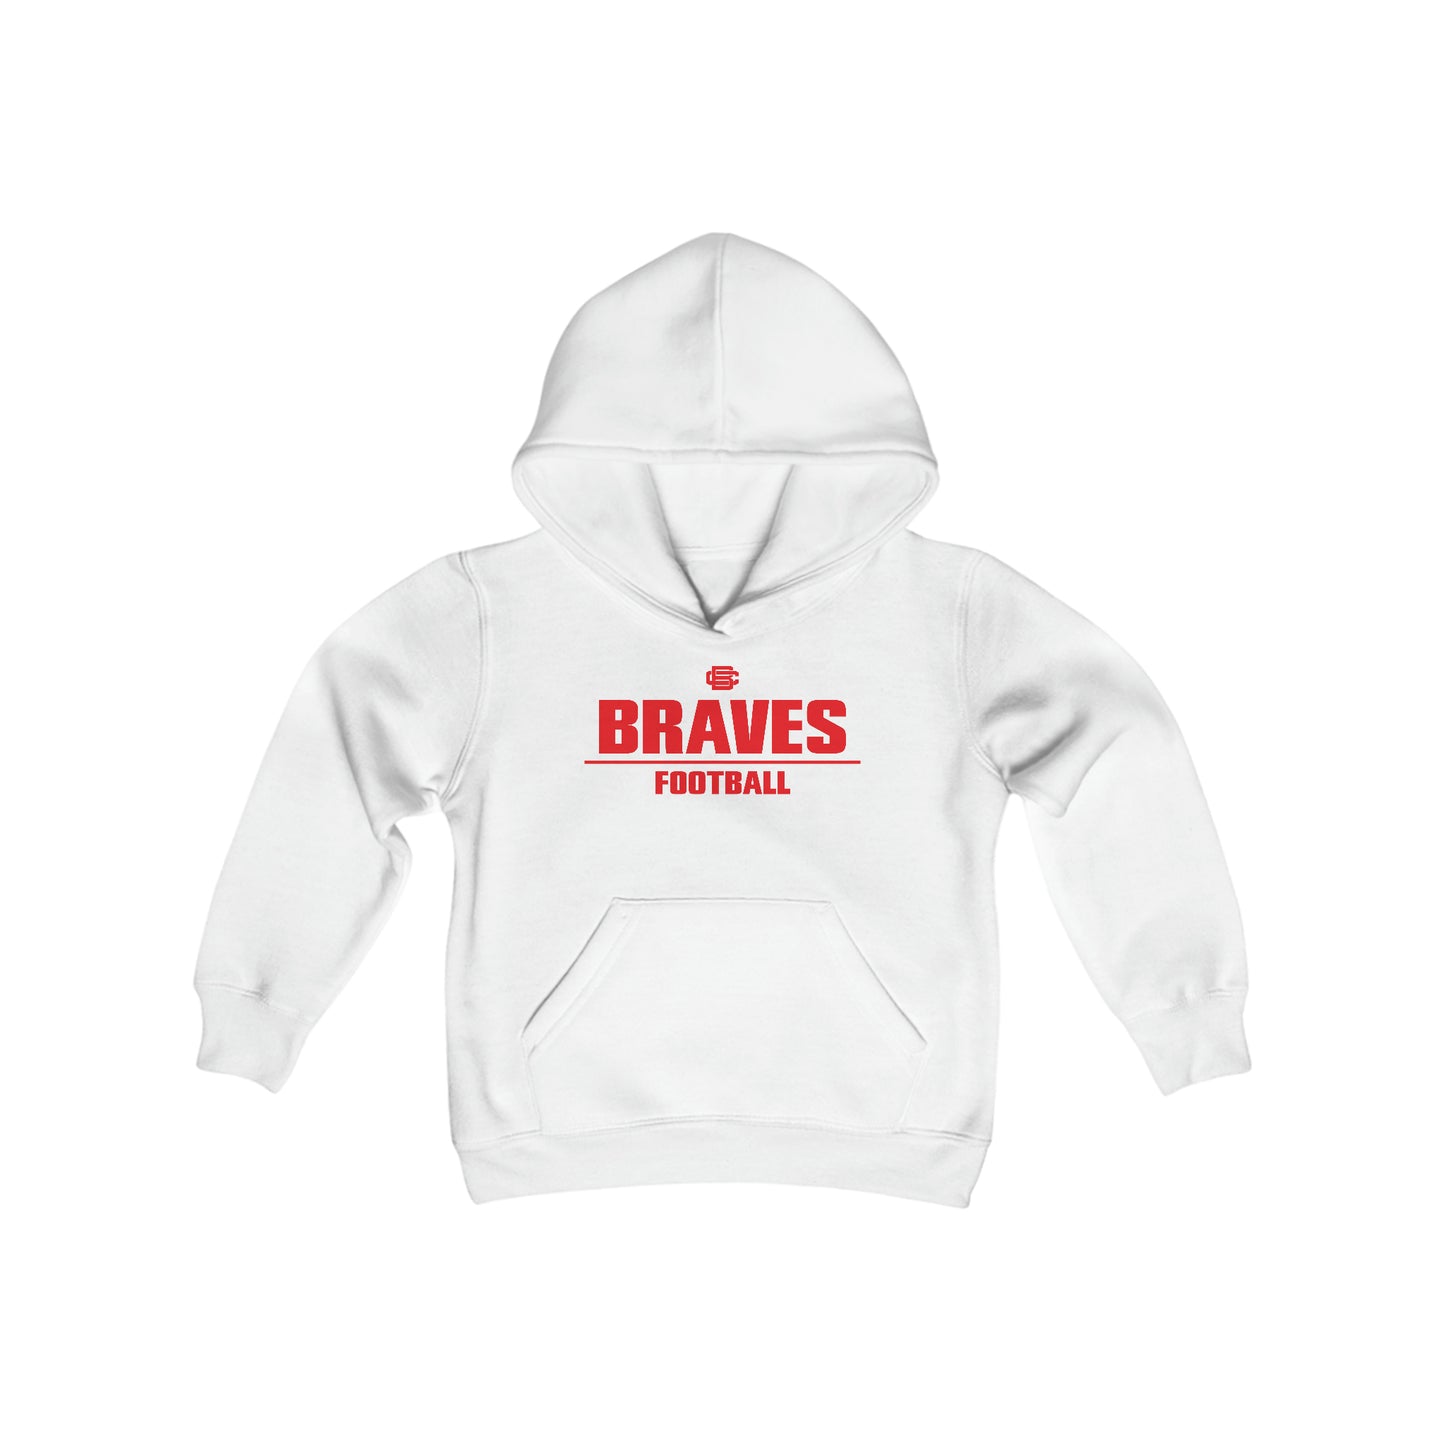 YOUTH - Braves Football Hooded Sweatshirt